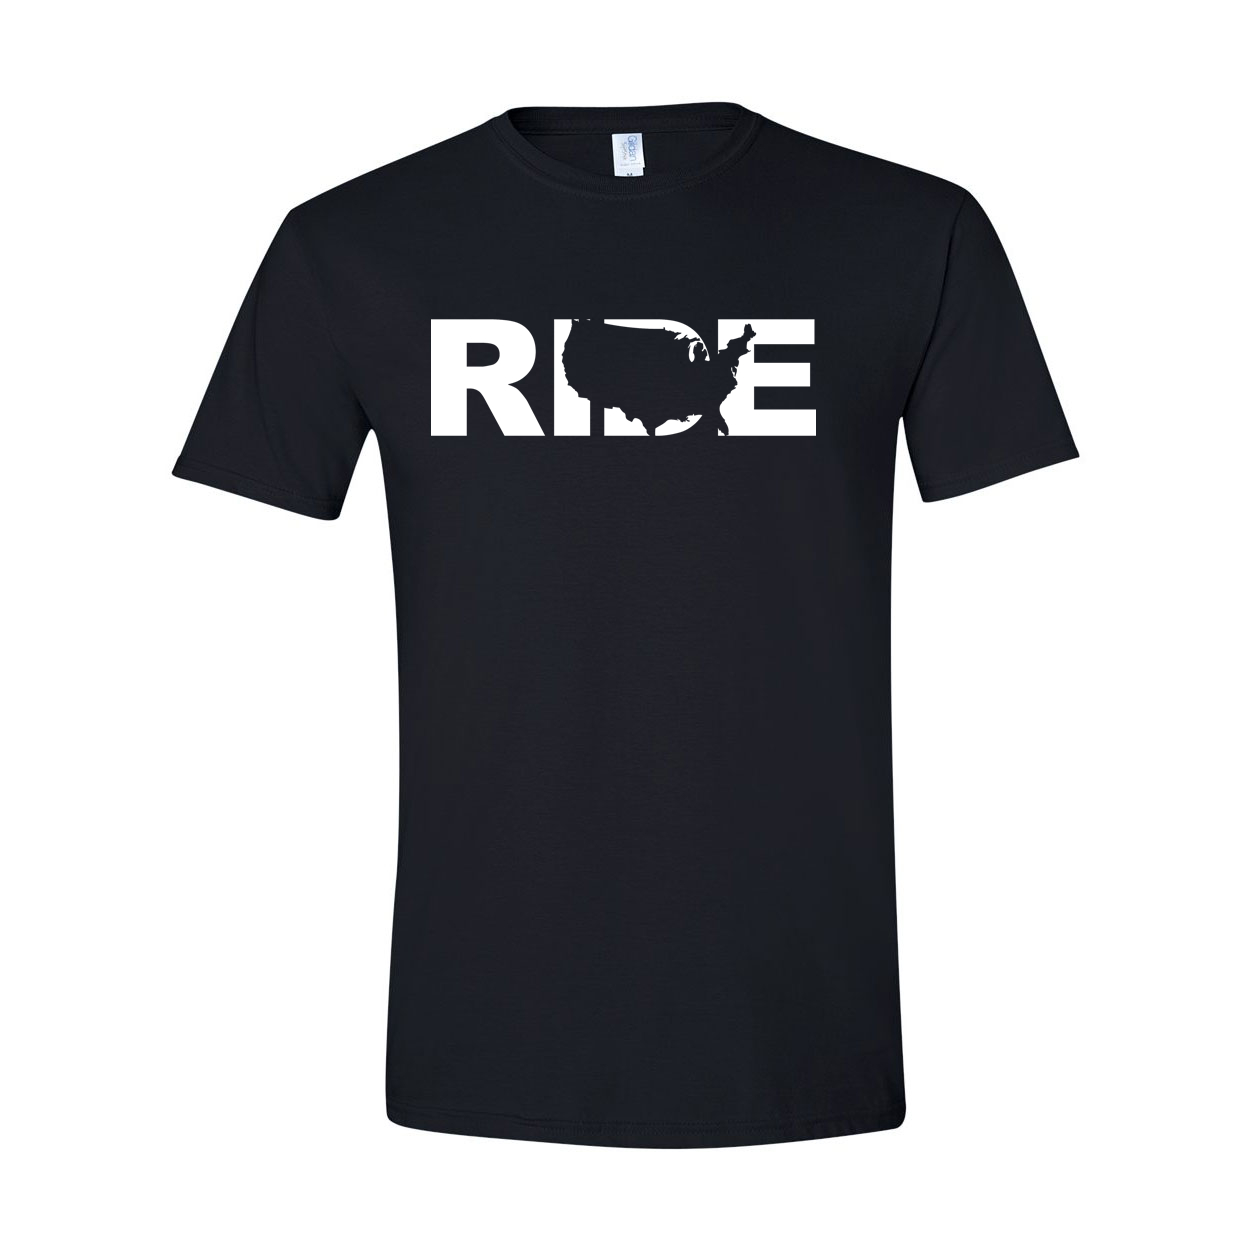 Ride United States Classic T-Shirt Black (White Logo)